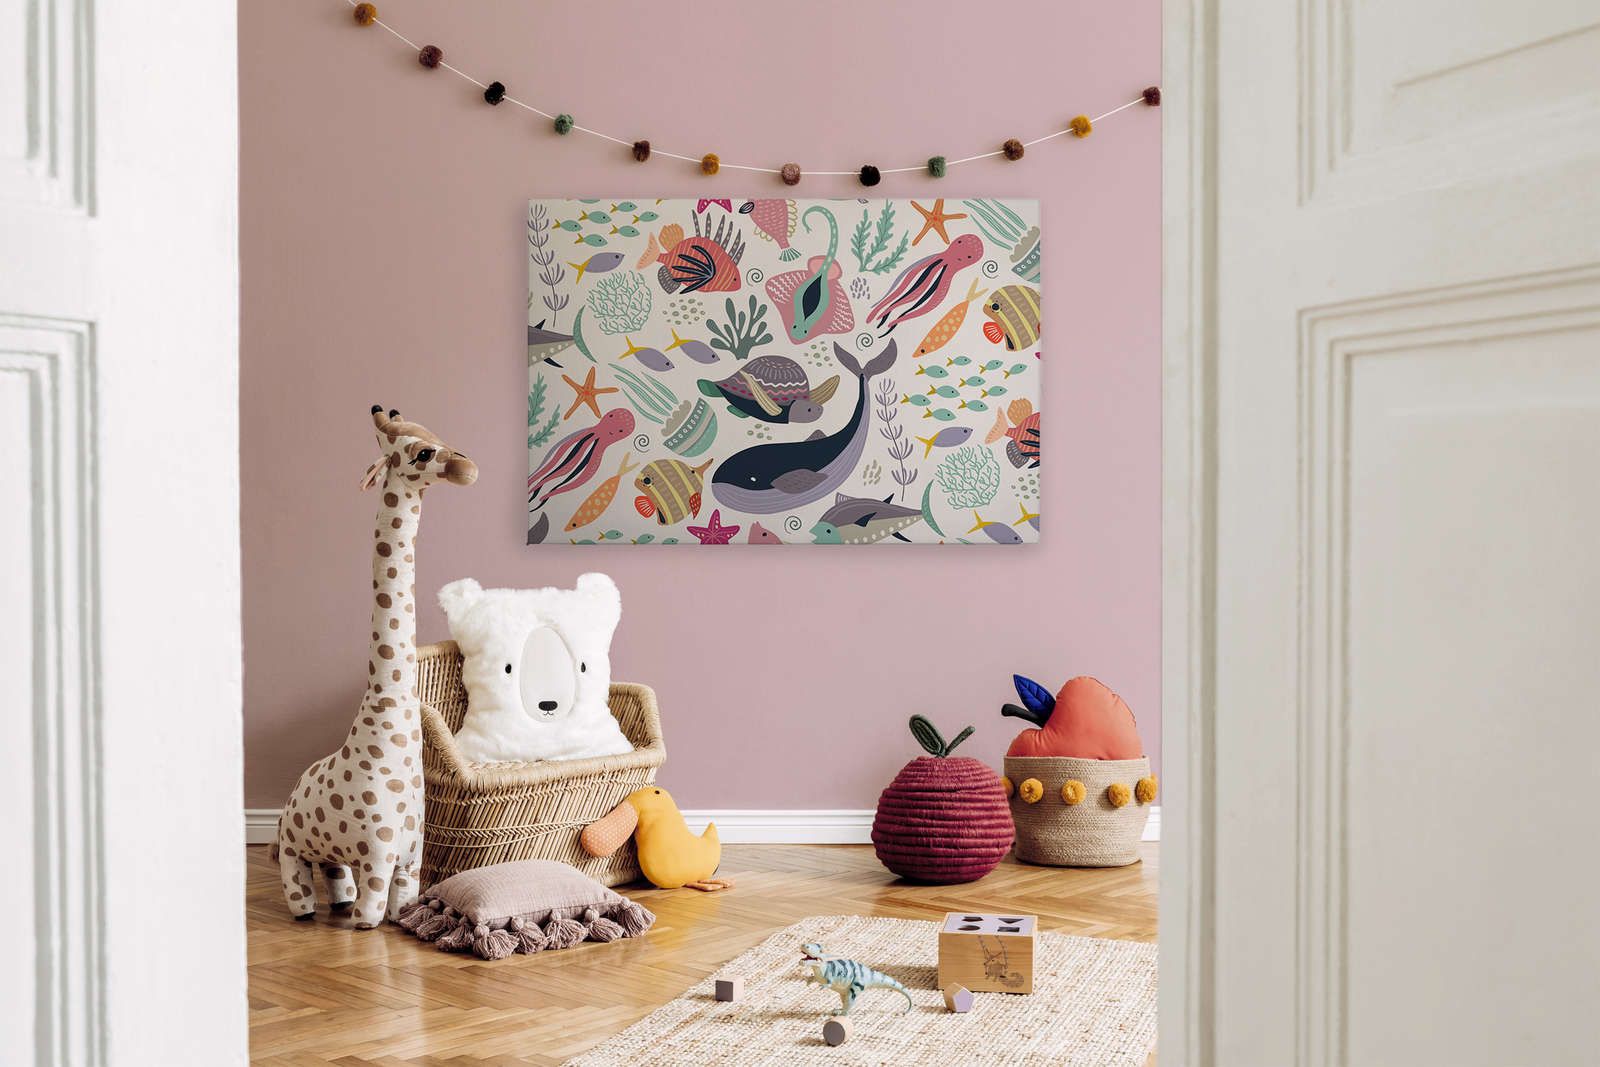             Canvas for children's room with underwater animals - 120 cm x 80 cm
        